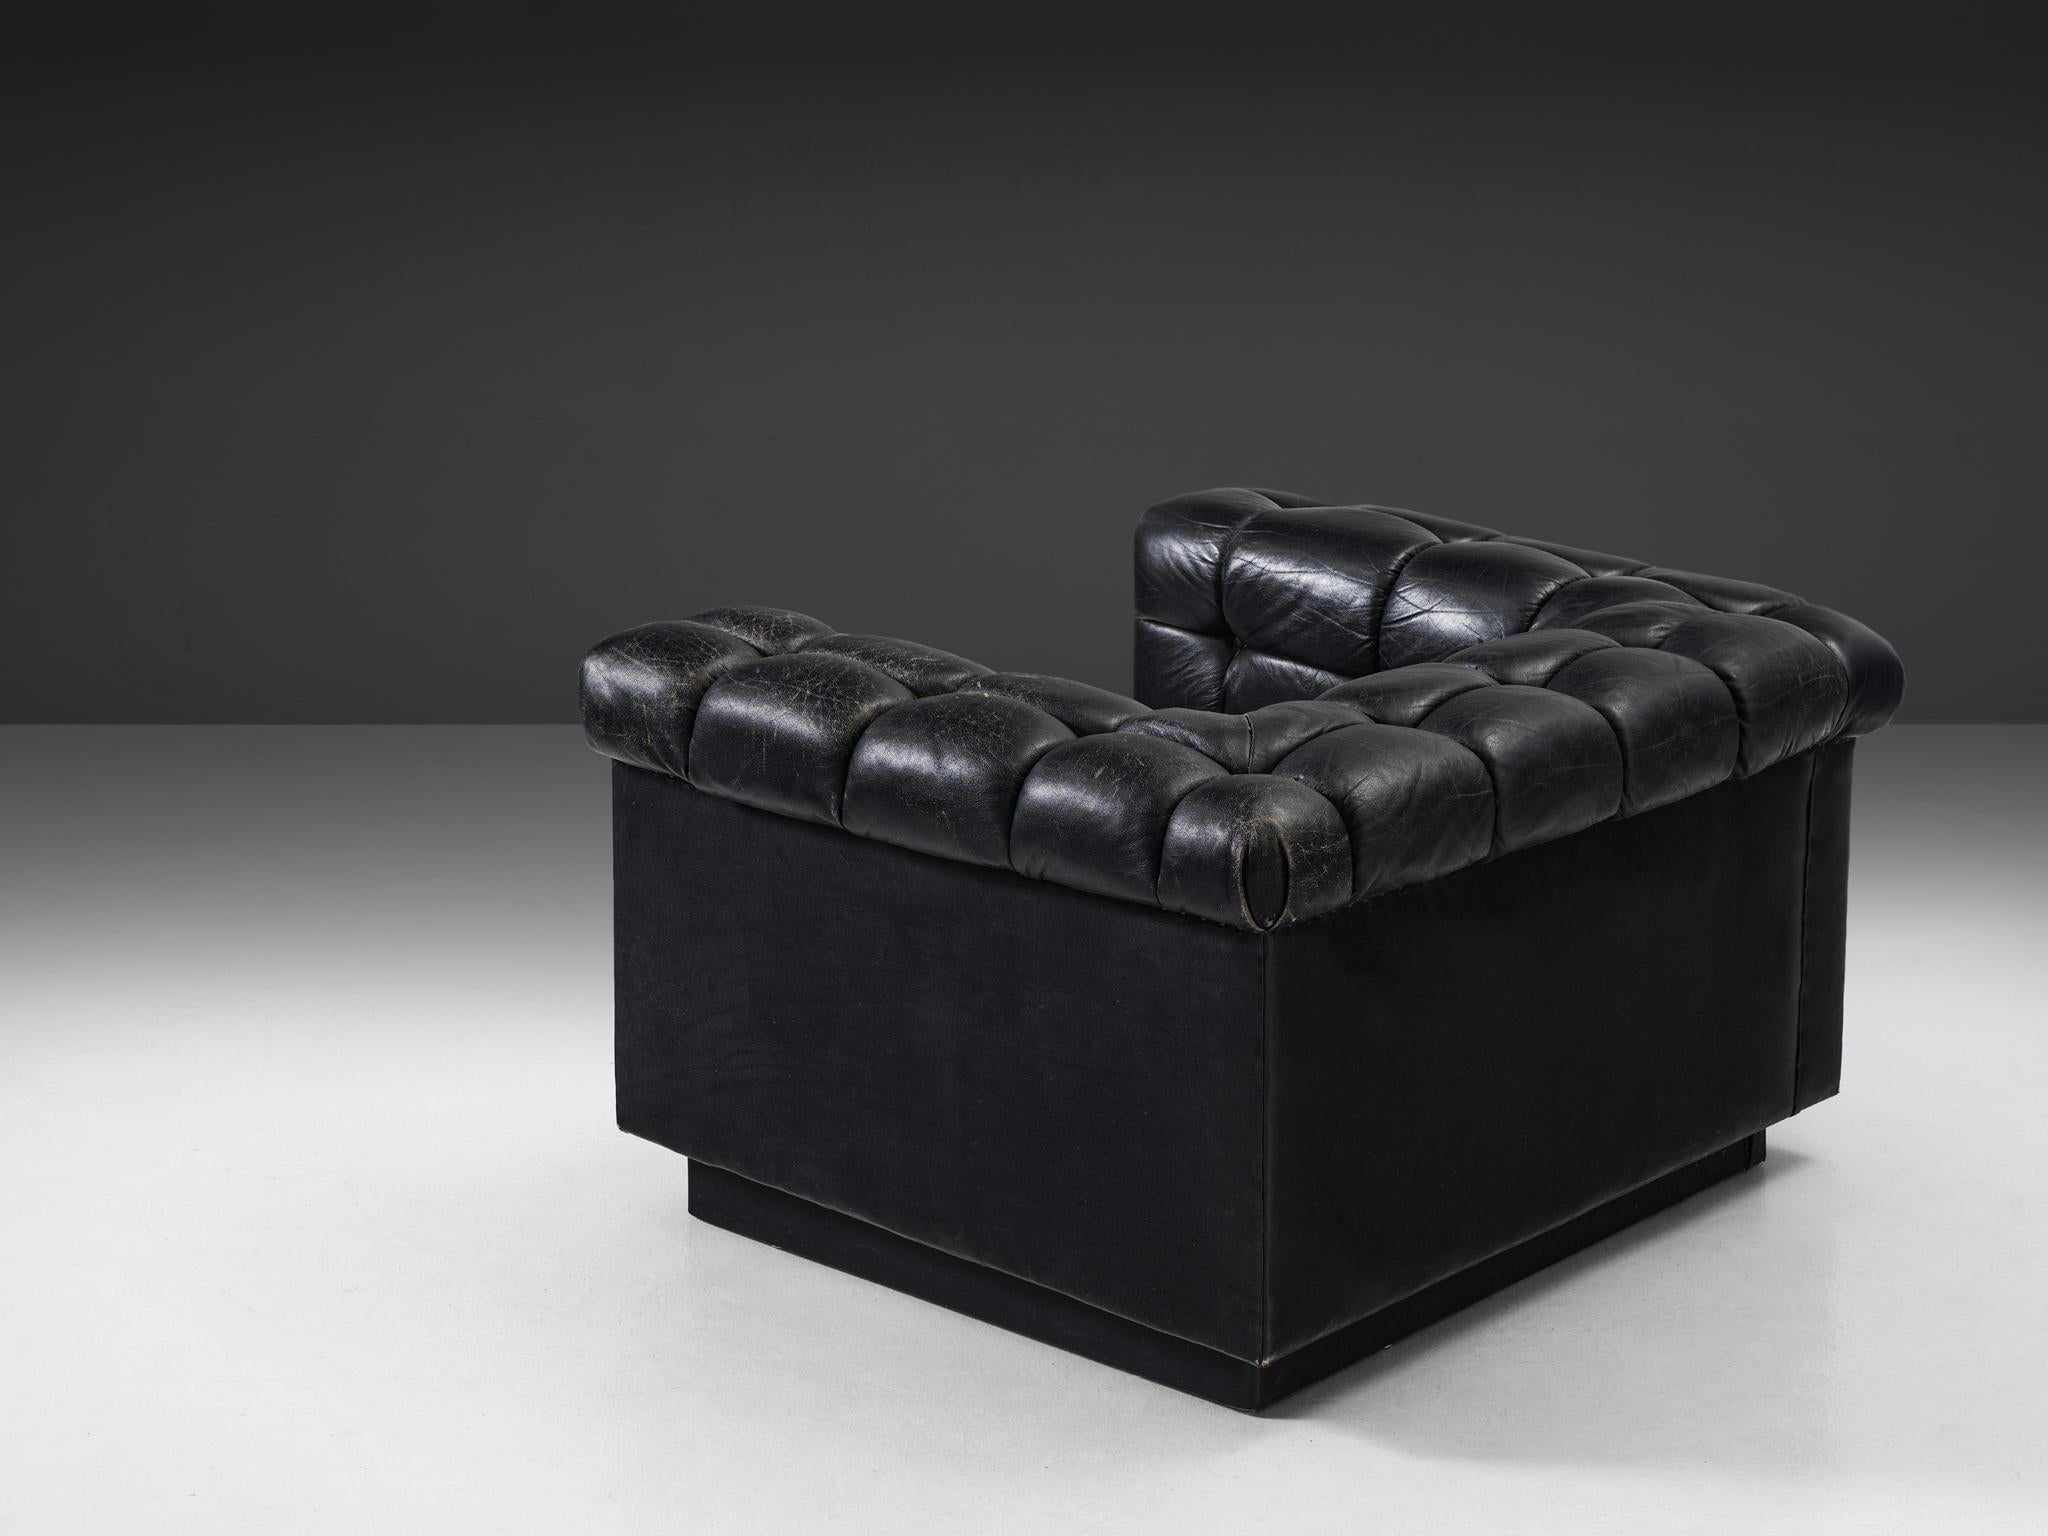 Mid-Century Modern Robert Haussmann Tufted Lounge Chair in Black Leather